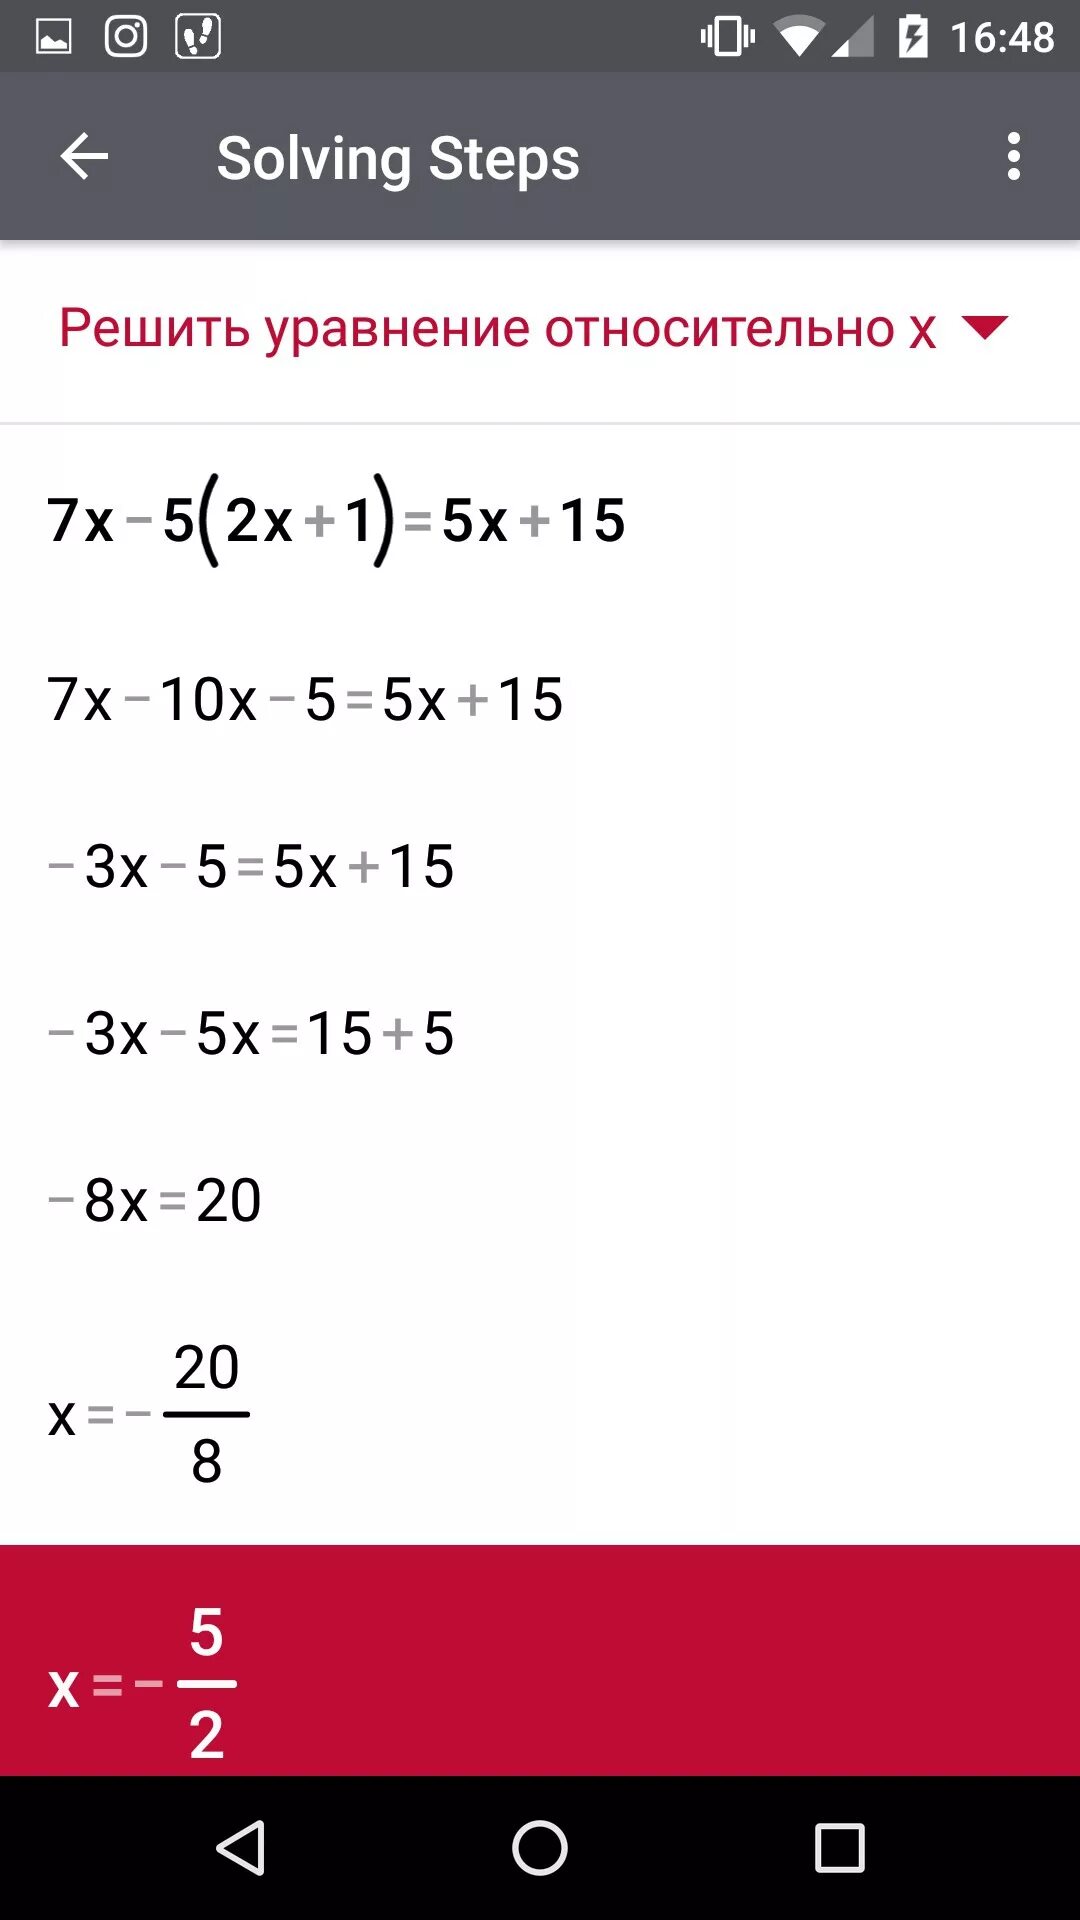 7x 8 4x 5 15 решите. 5x 2 −x/ + 1/2x= − x/5. {X+2>5,−X>−7. 7x 5 2x 1 5x +15 решение. 7-X/X-7 решение.